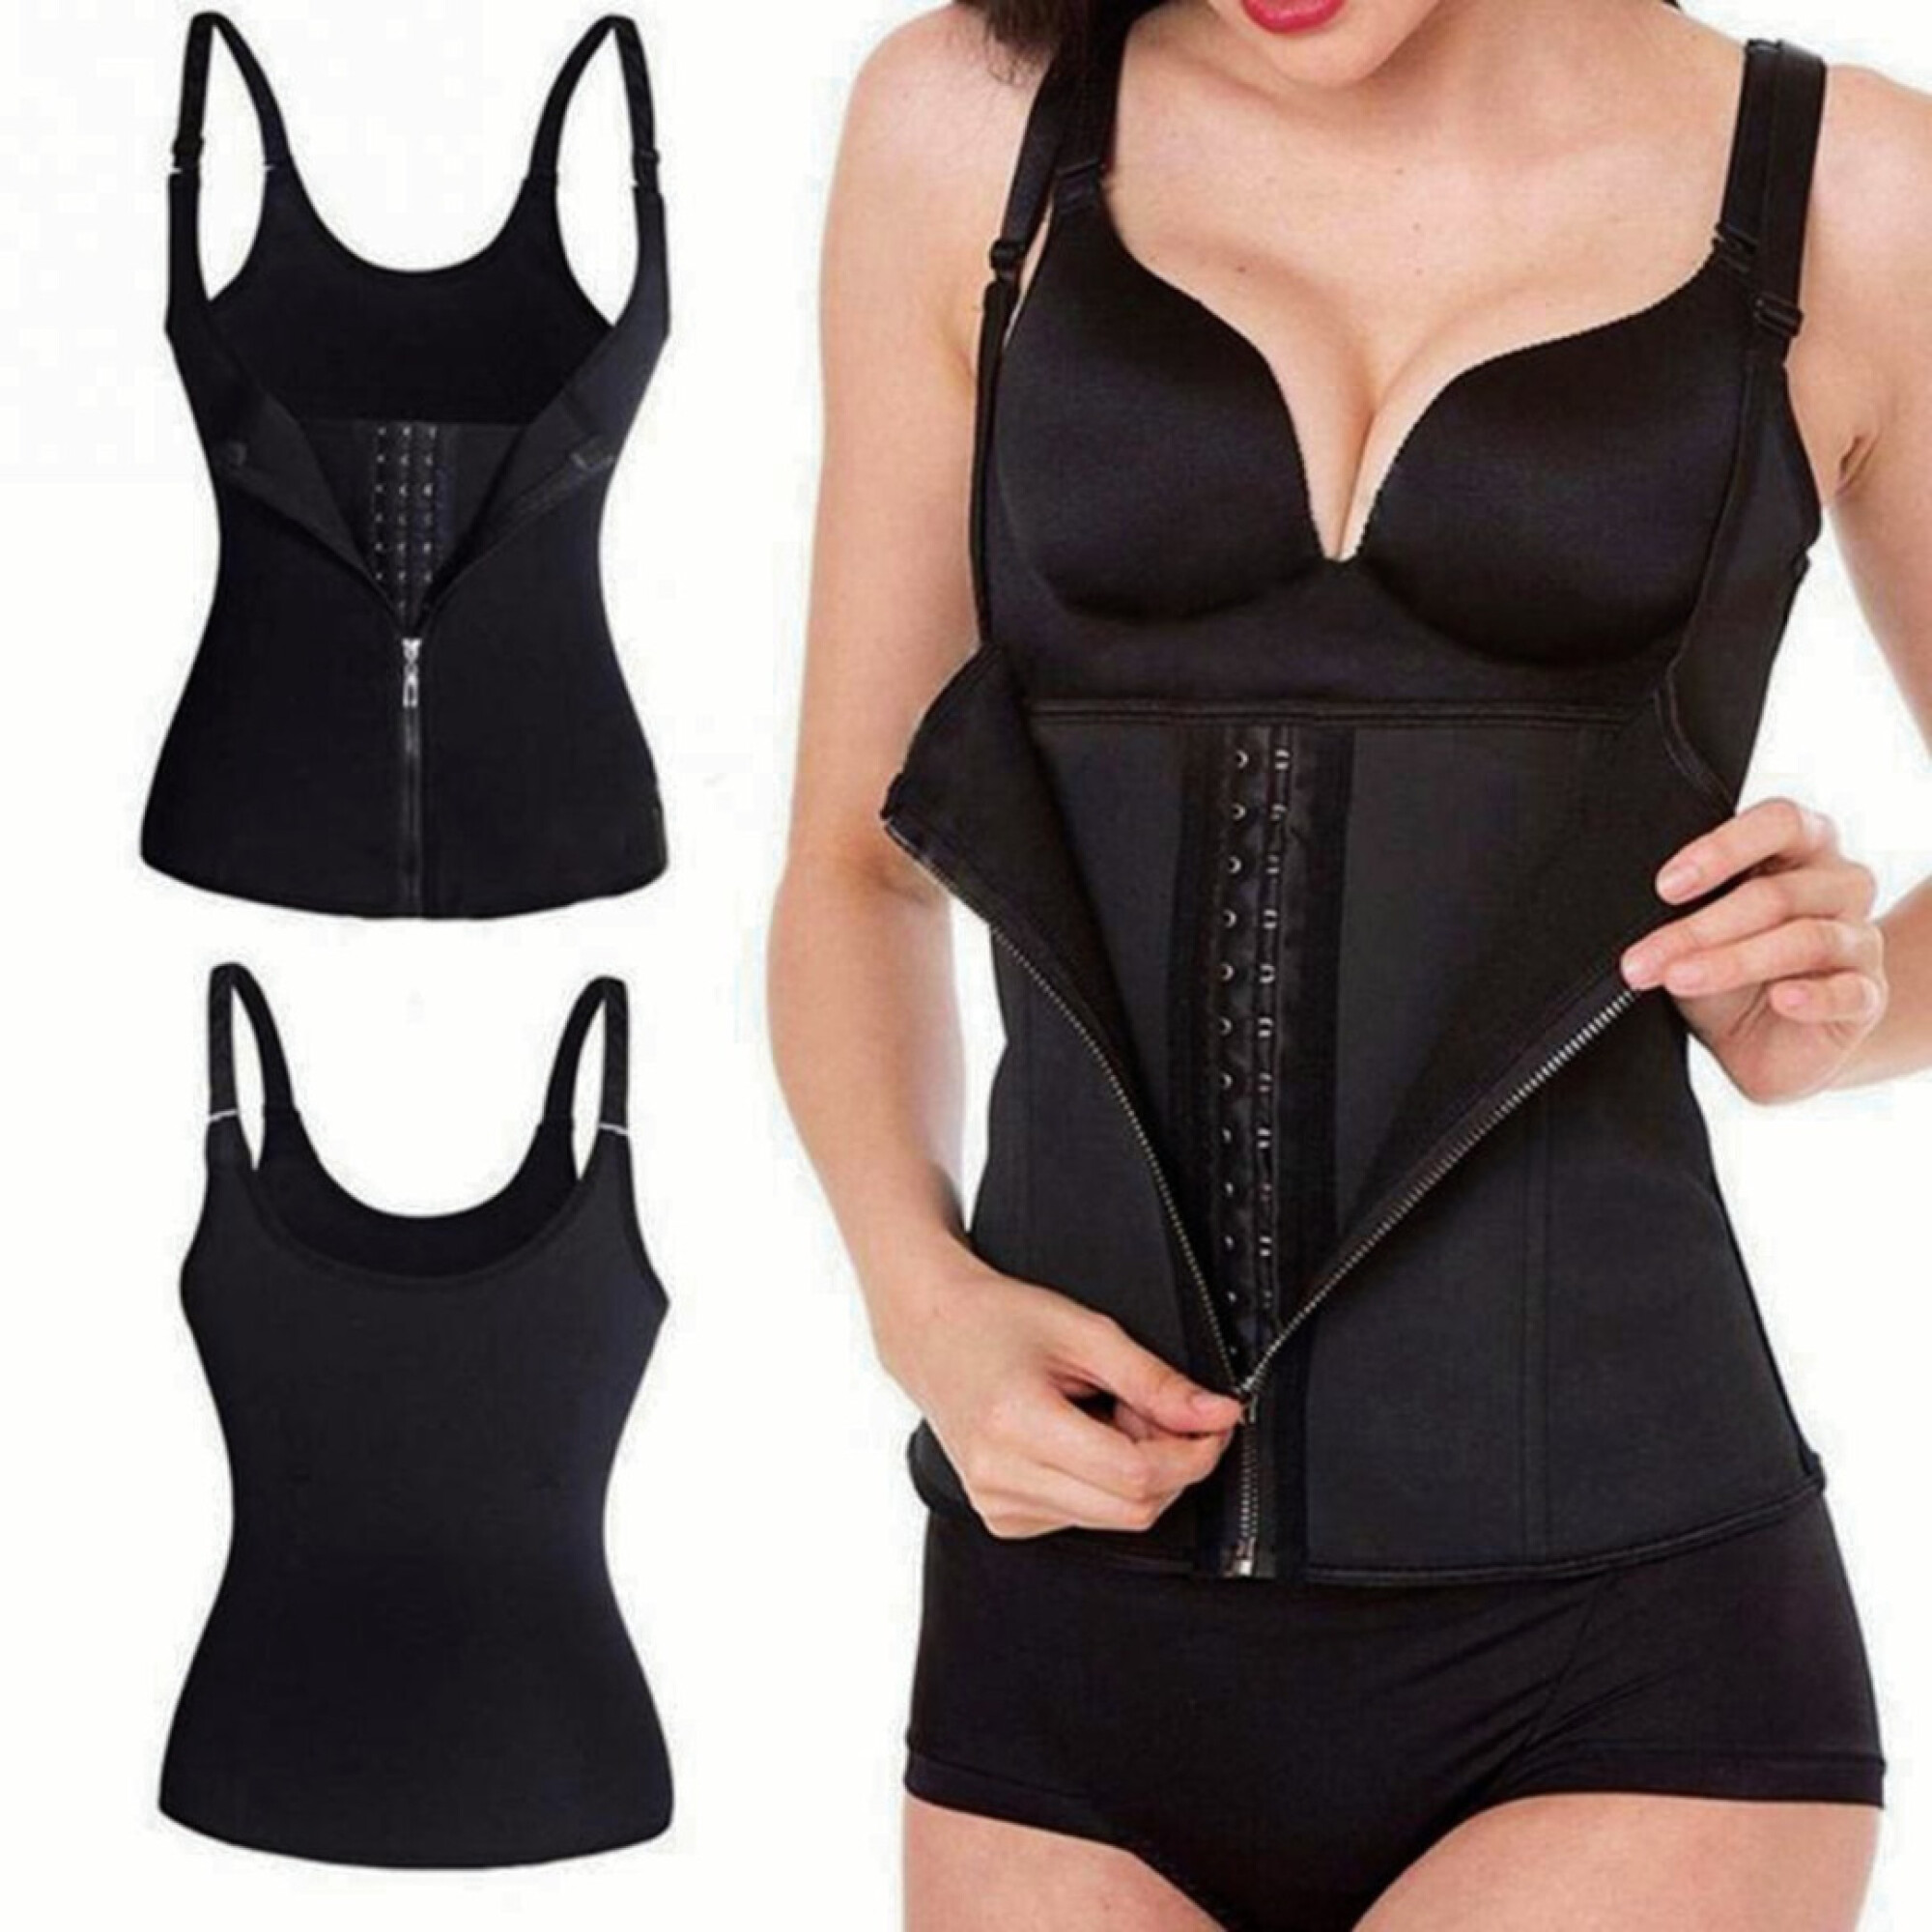 https://f.fcdn.app/imgs/a6e1d9/unaganga.com.uy/unaguy/61ae/original/catalogo/230208_230208-1_1/2000-2000/faja-reductora-moldeadora-corset-abdomen-cintura-ajustable-talle-2xl.jpg